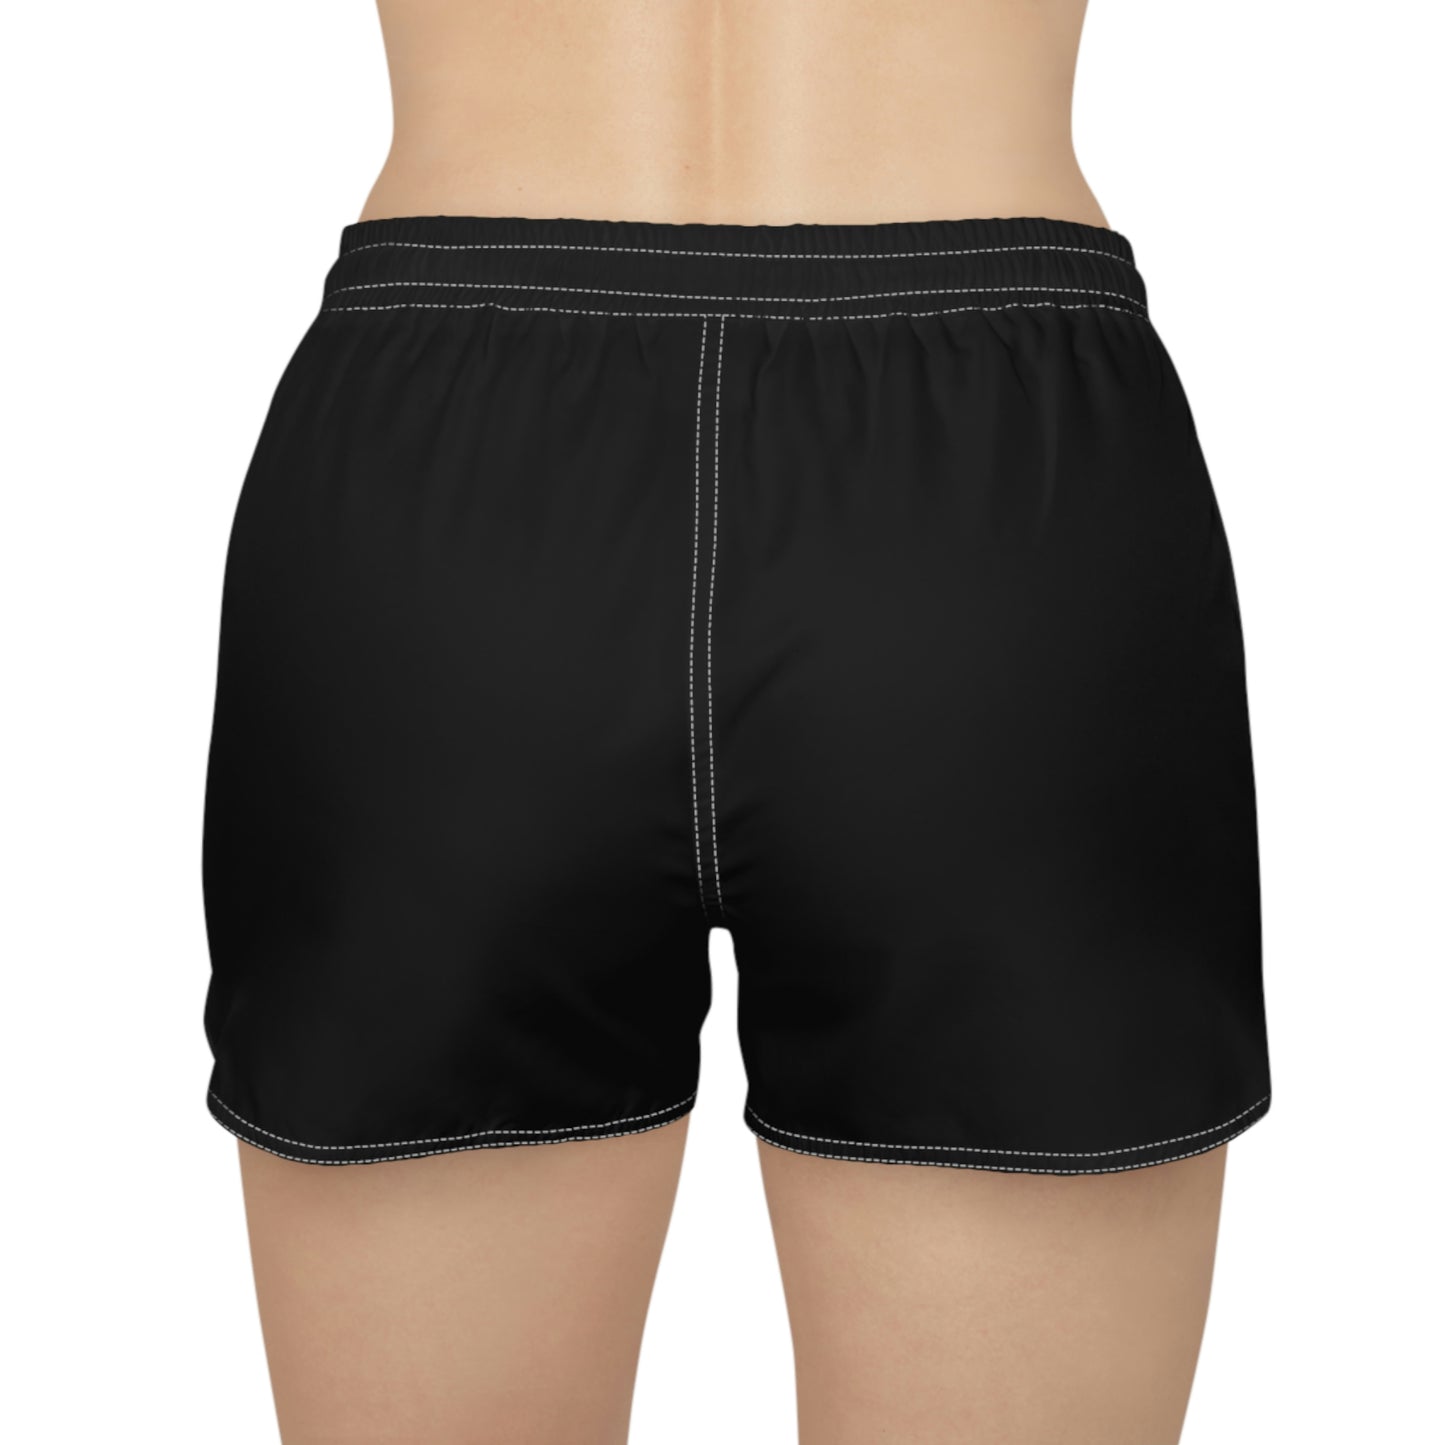 Women's FTF Shorts Black/Red